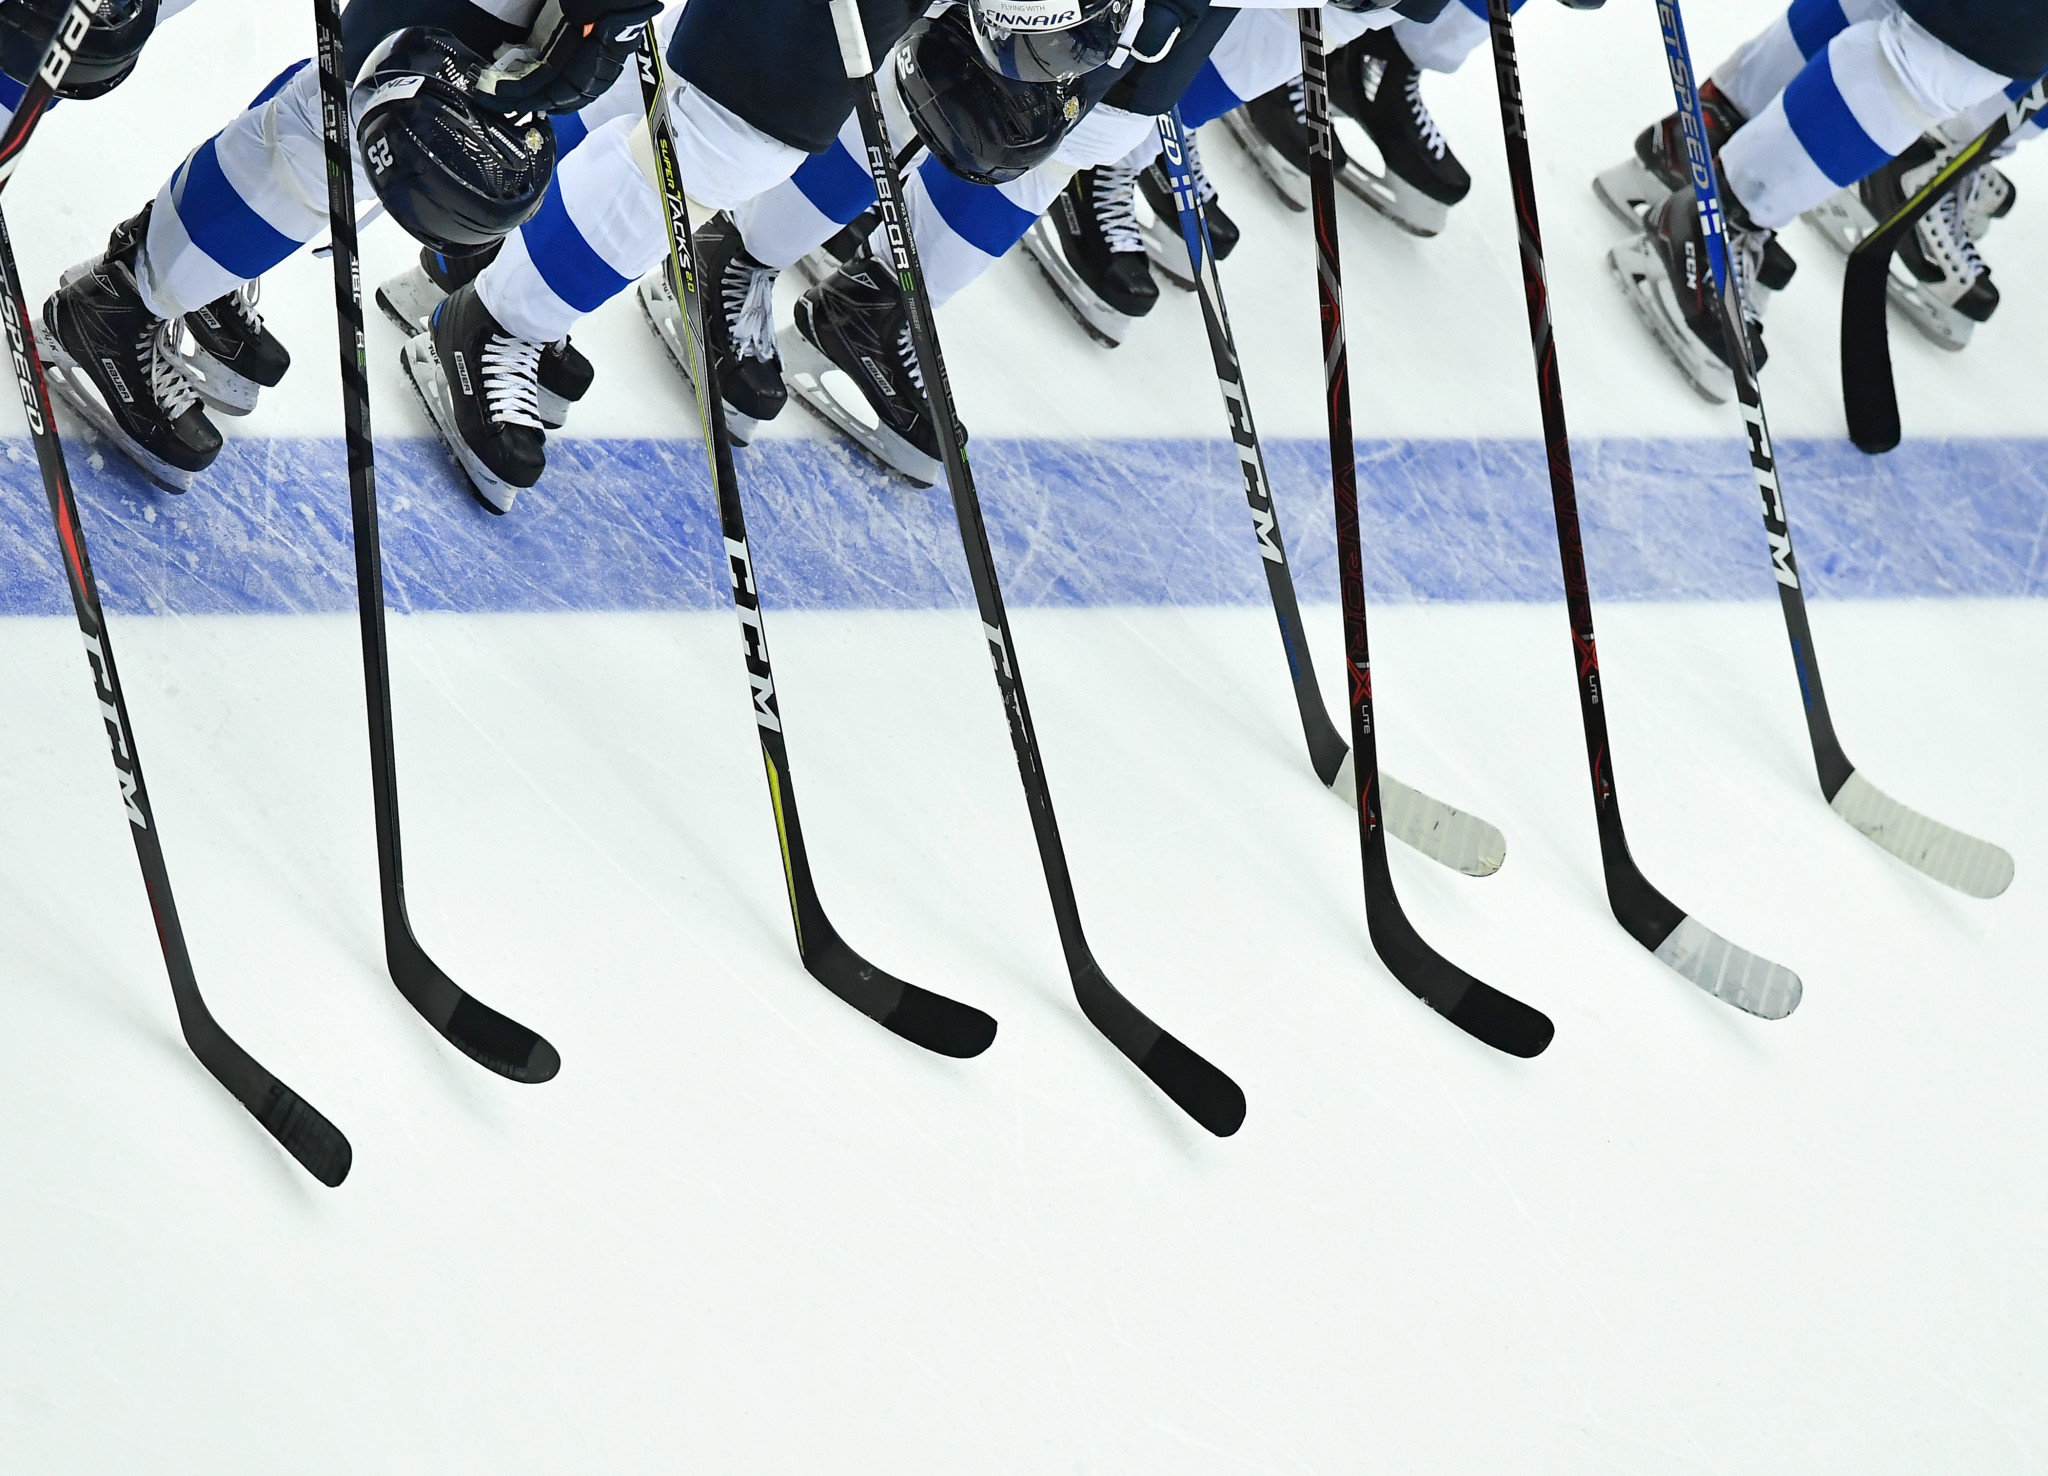 IIHF World Championship organisers call for spare ice hockey equipment